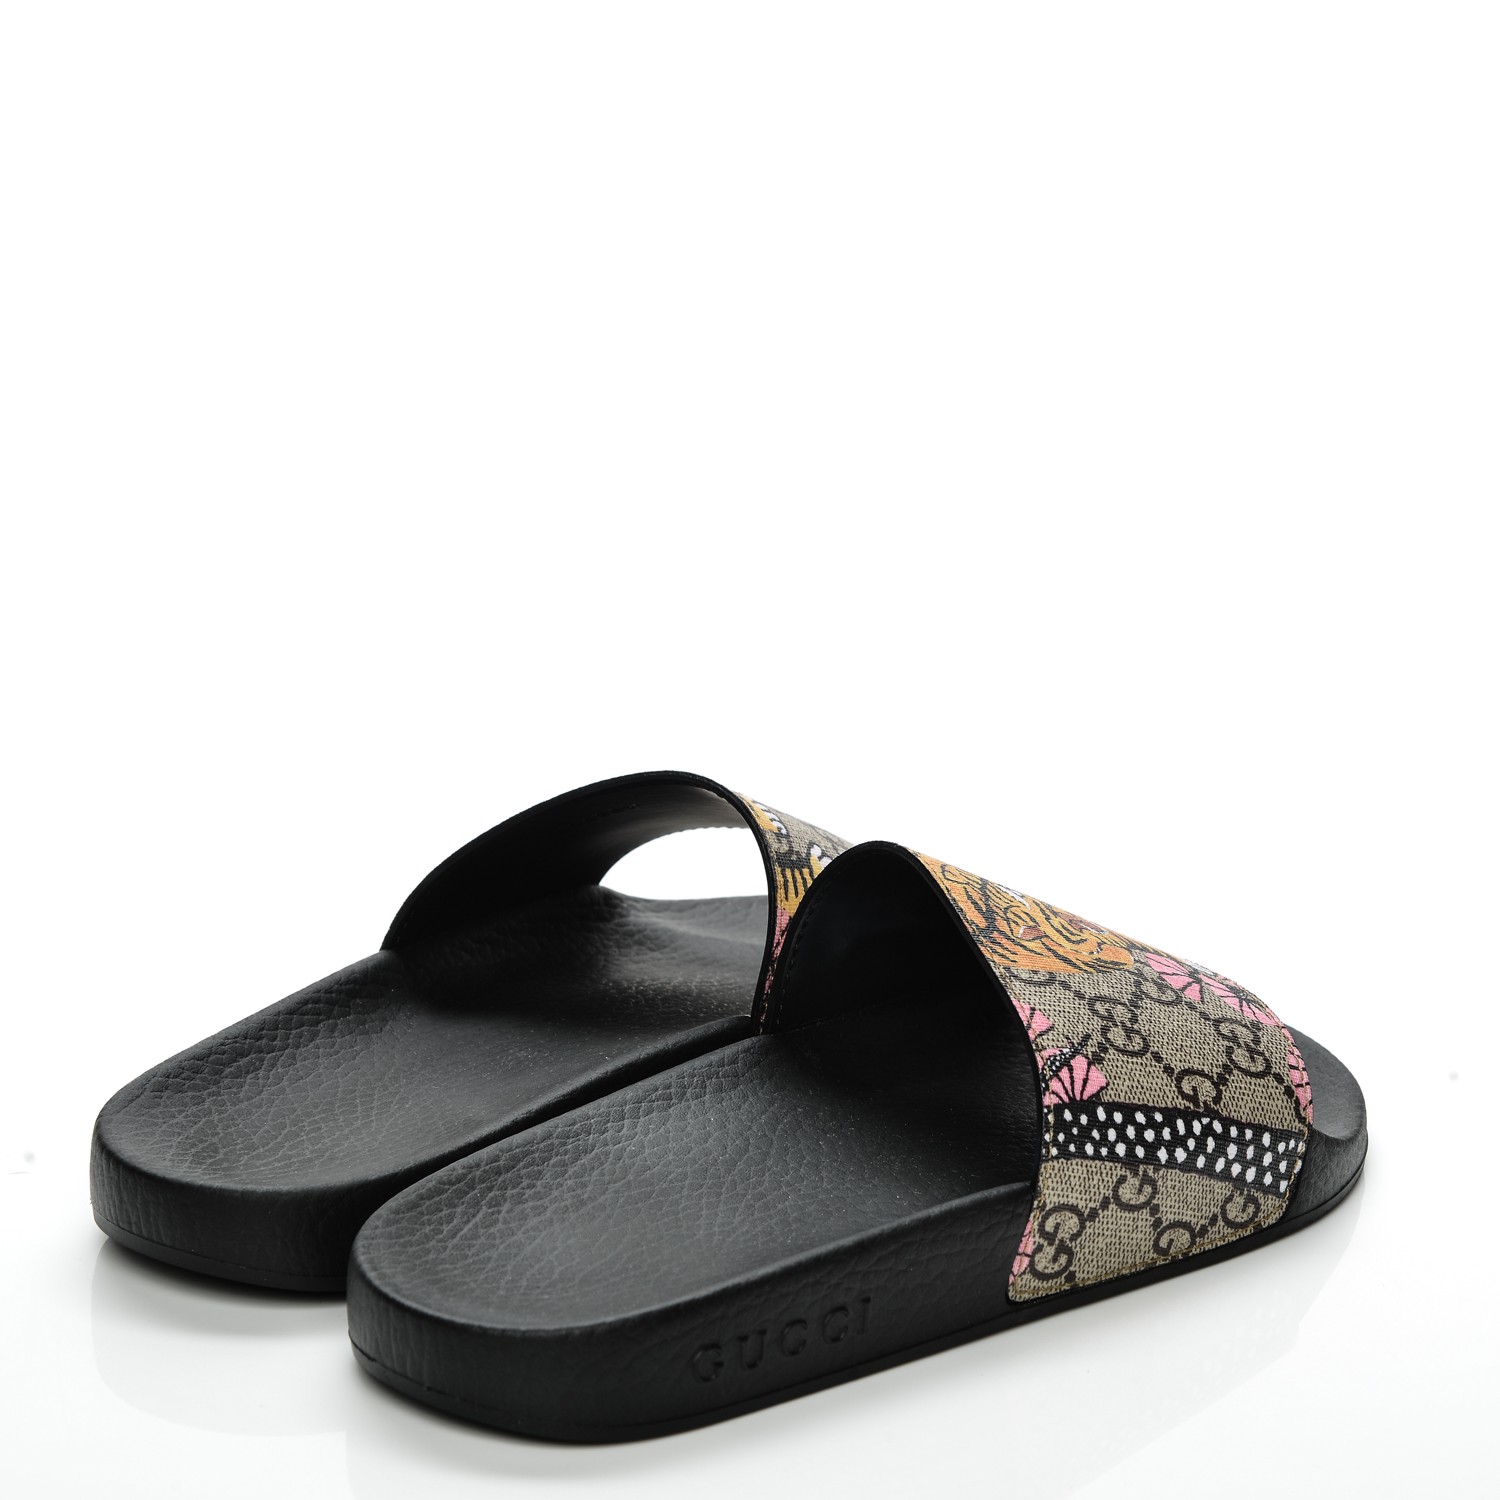 GUCCI GG Supreme Monogram Bengal Slide Sandals 37 Beige Pink 199991